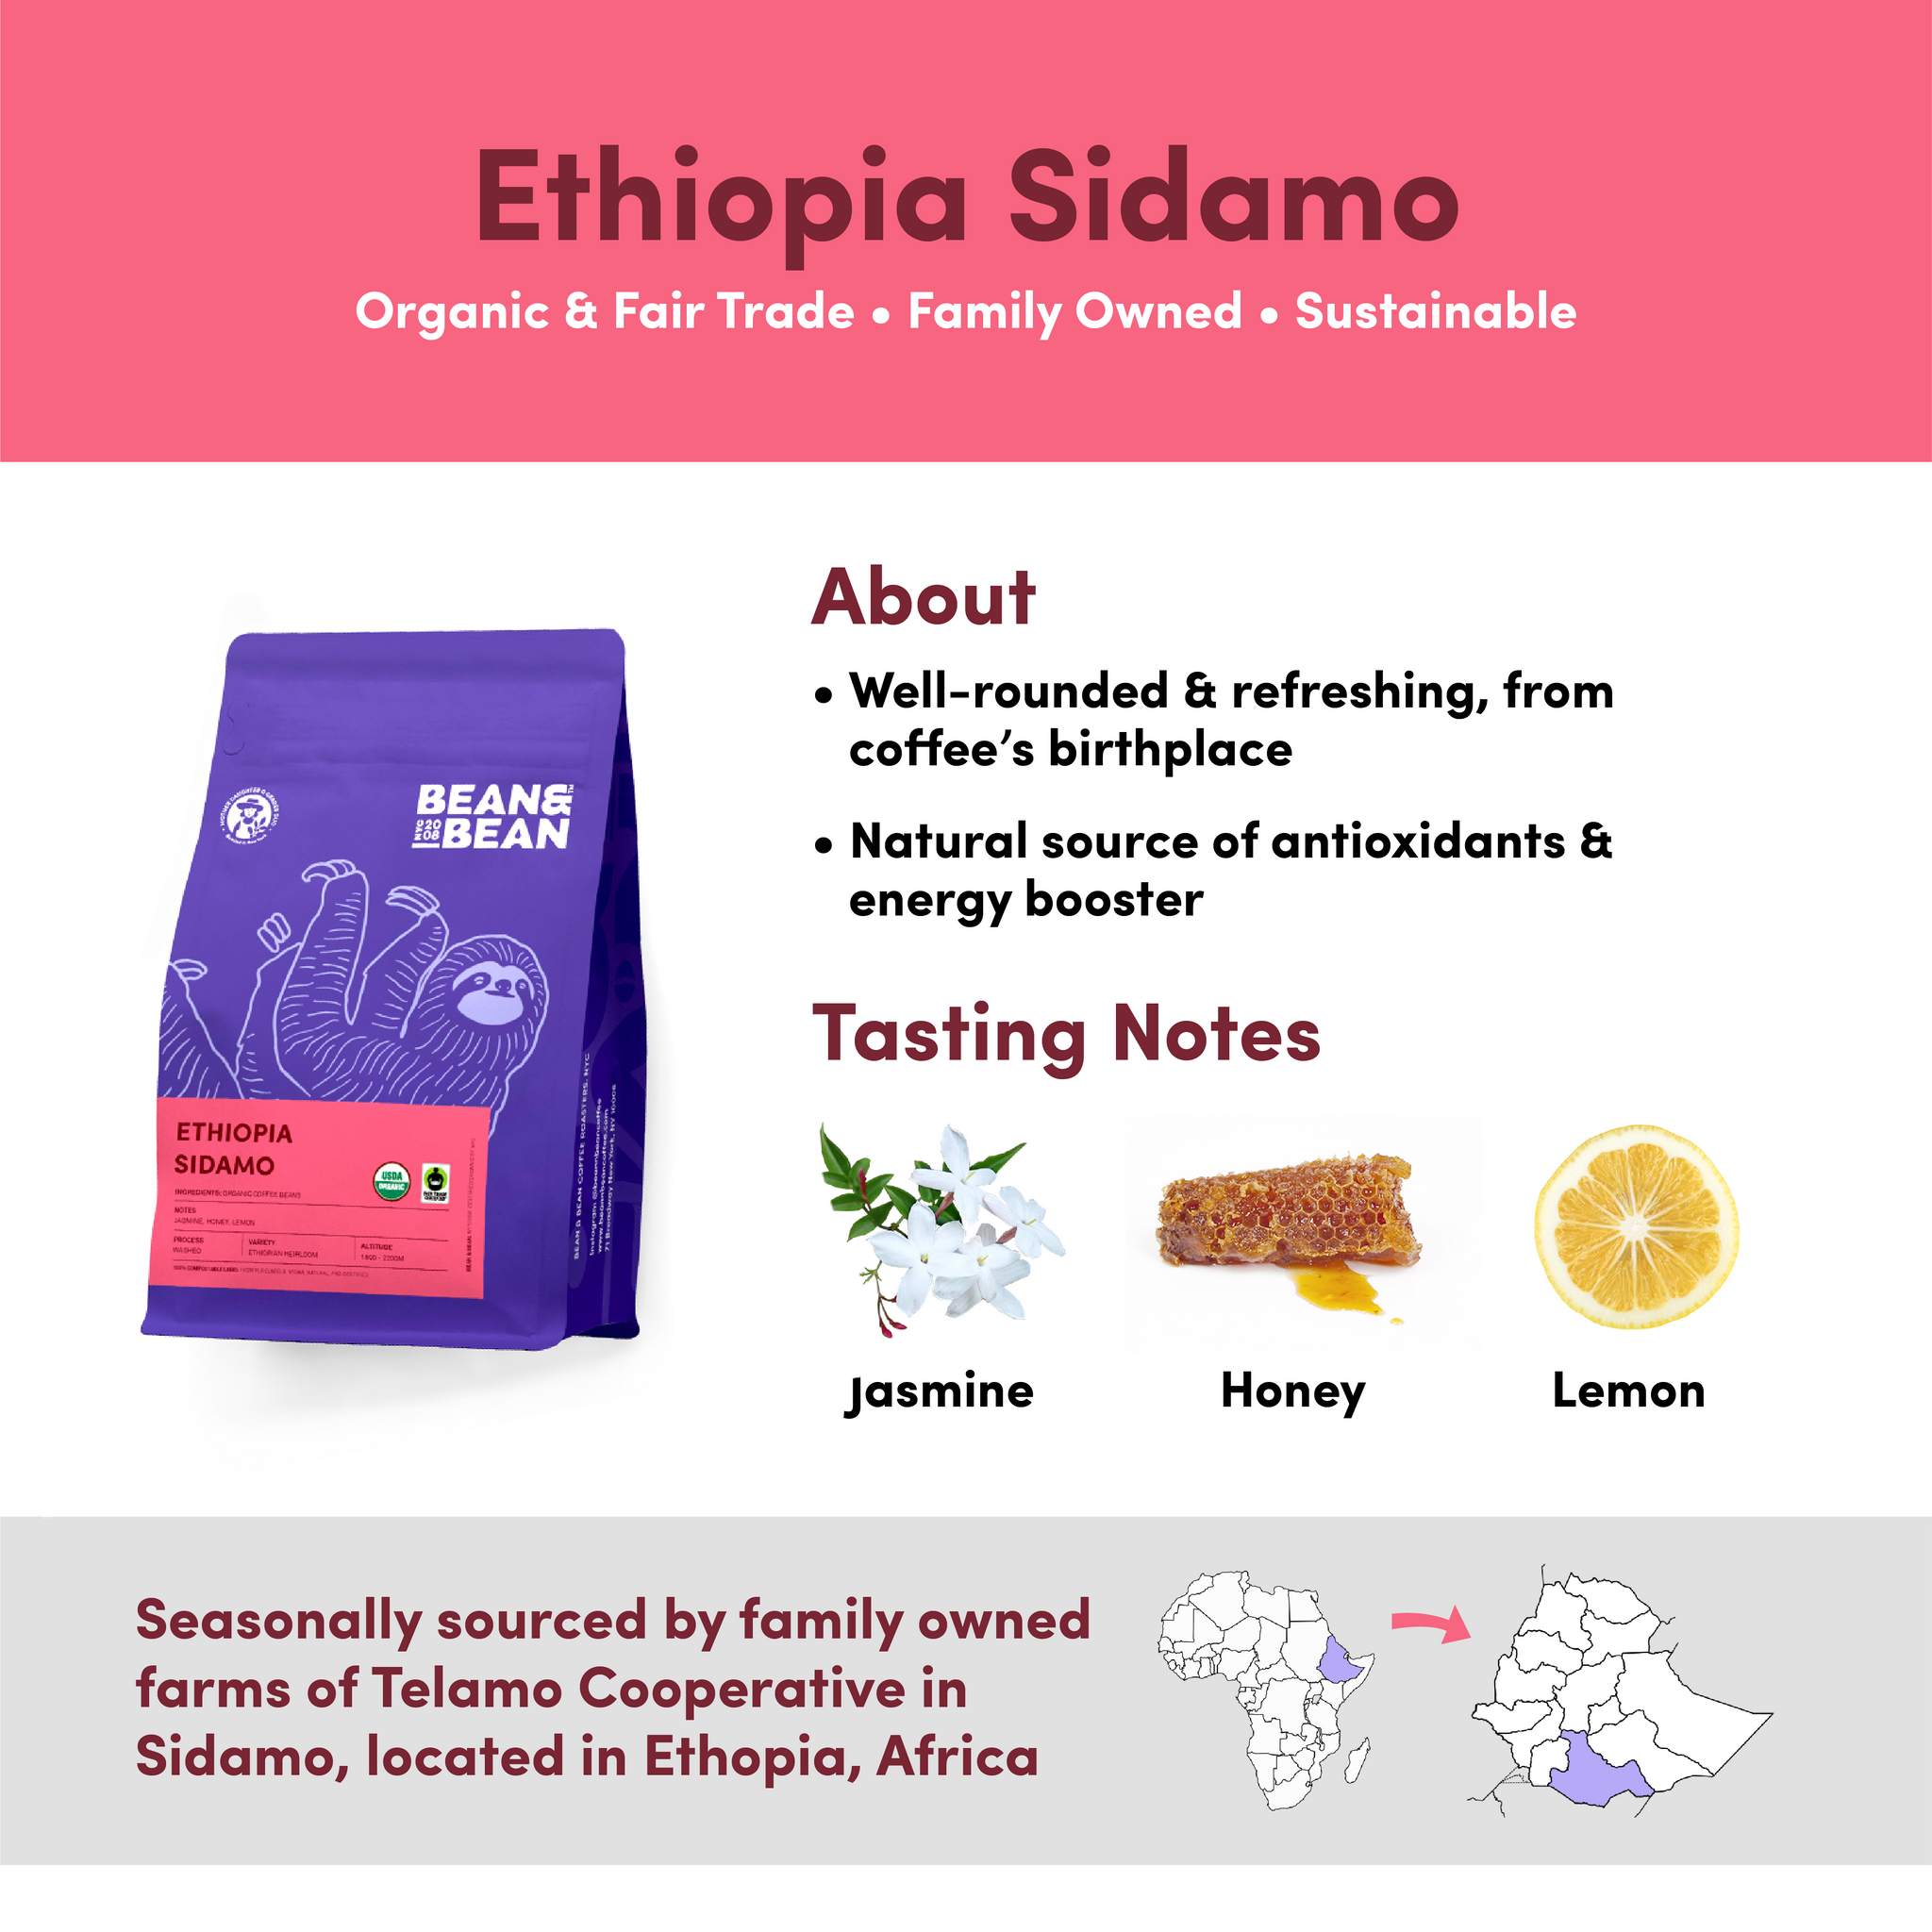 Ethiopia Sidamo, Organic & Fair Trade